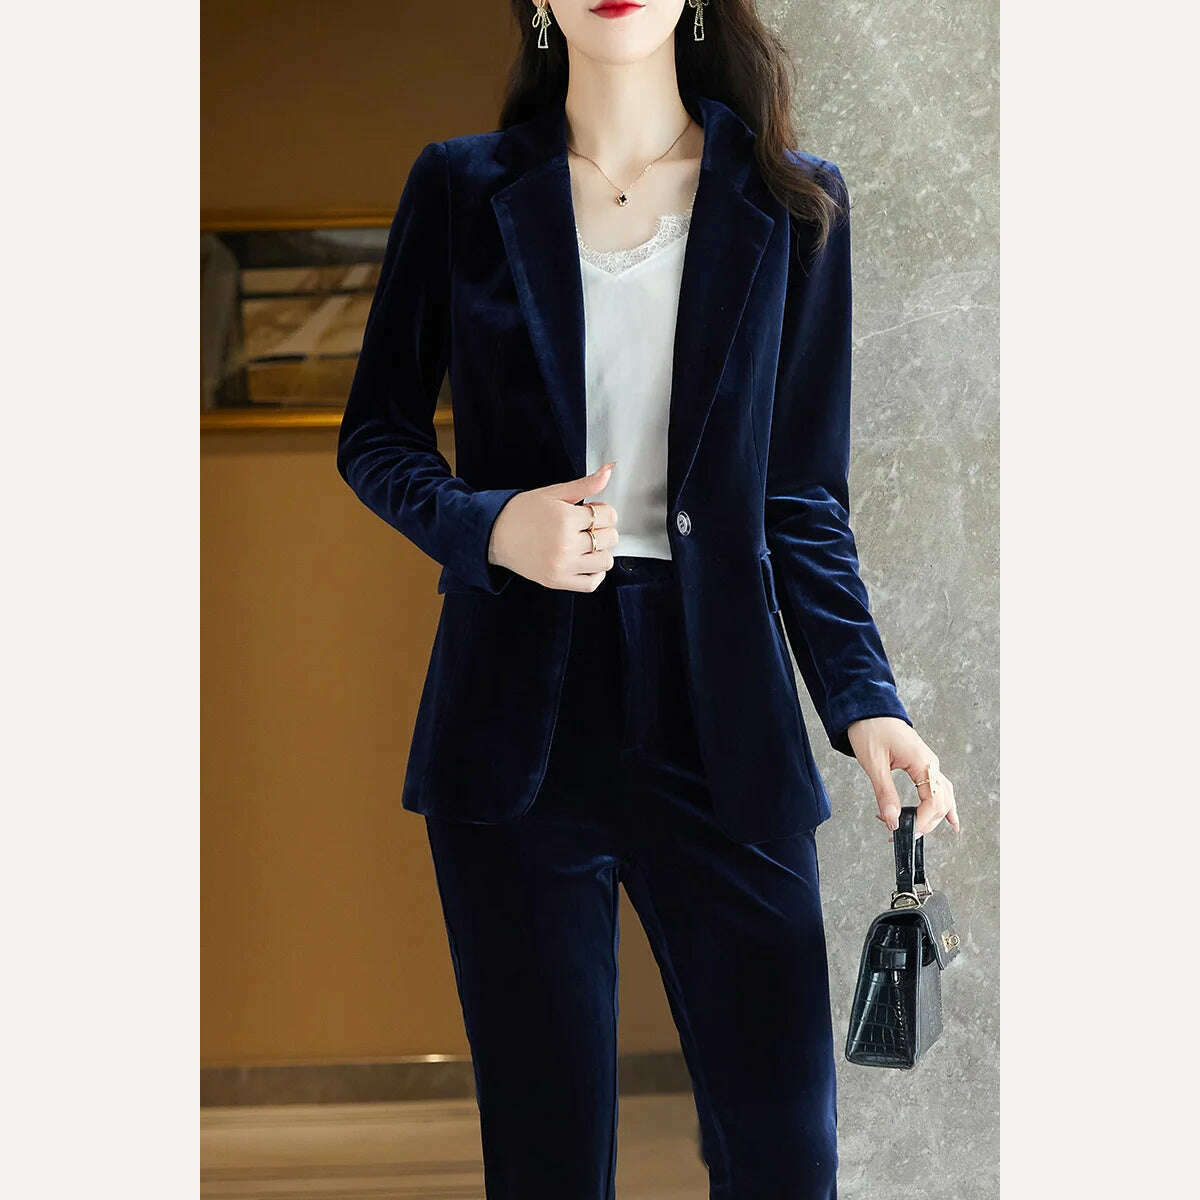 KIMLUD, Korean High-Quality Velvet Autumn Winter Formal Ladies Blazer Business Suits with Sets Work Wear Office Uniform Pants Jacket, Blue blazer  pants / S / China, KIMLUD Womens Clothes